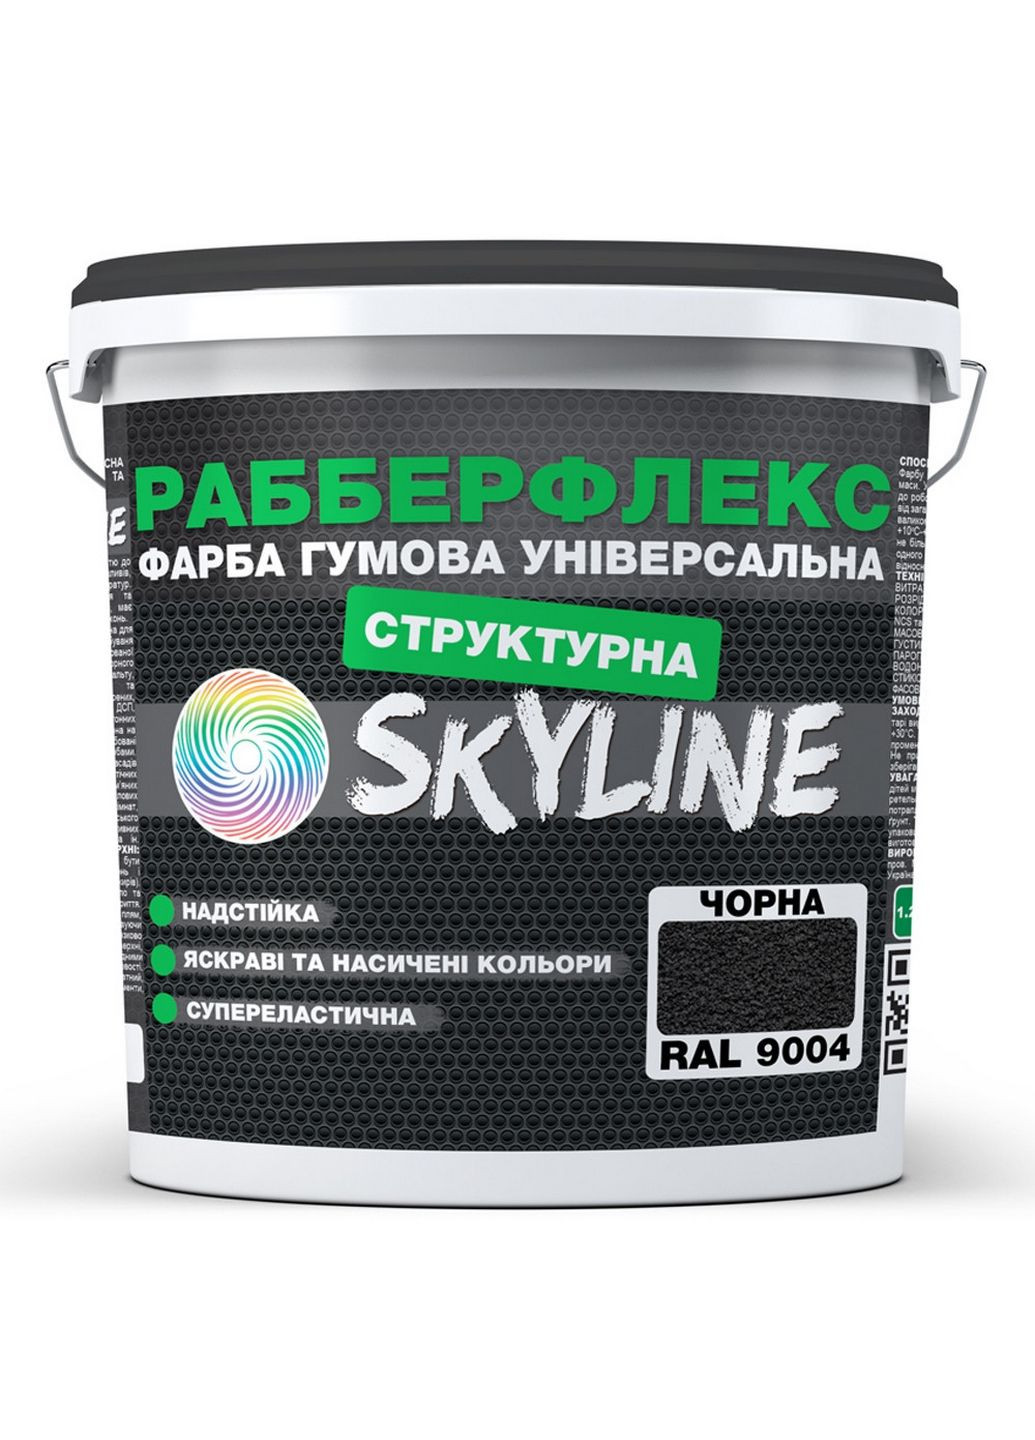 Краска резиновая структурная «РабберФлекс» 14 кг SkyLine (289369629)